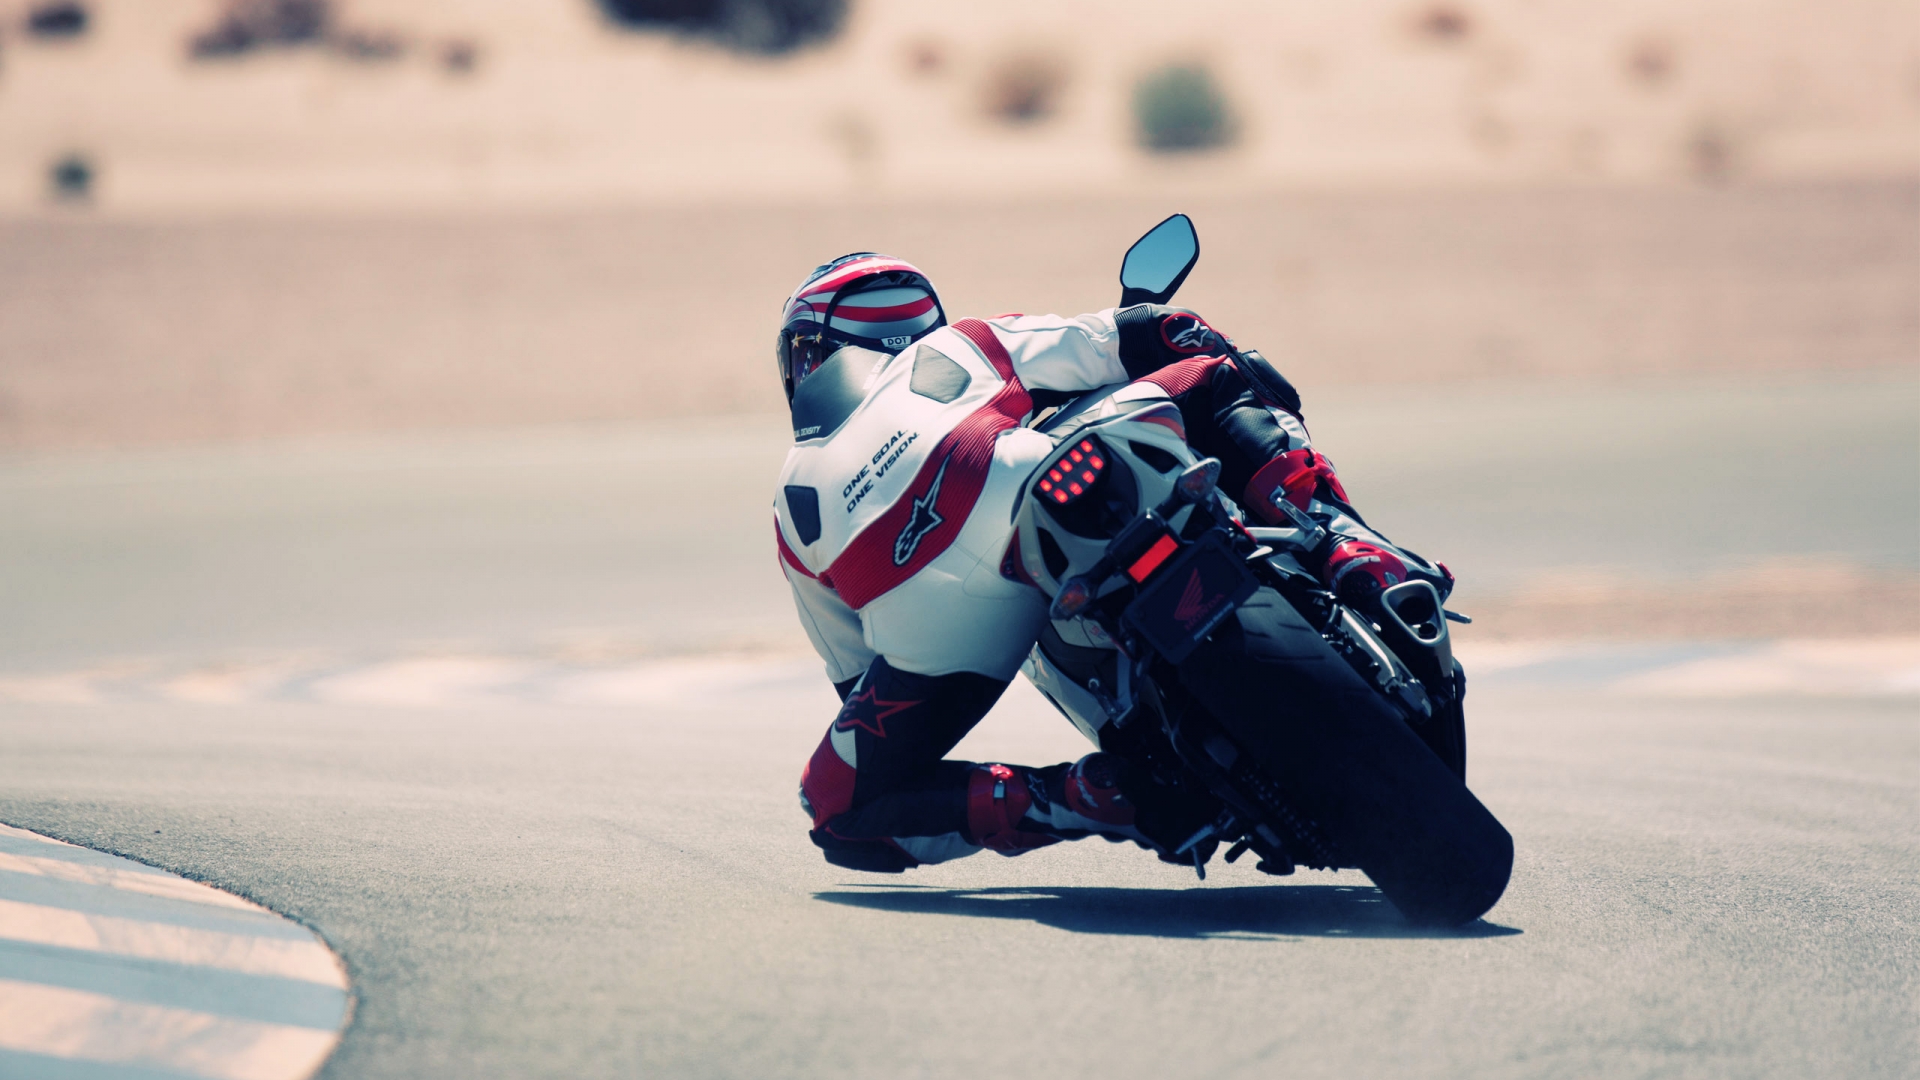 Motogp Honda Bike On Race Track - Cbr 1000 Rr 2012 - HD Wallpaper 